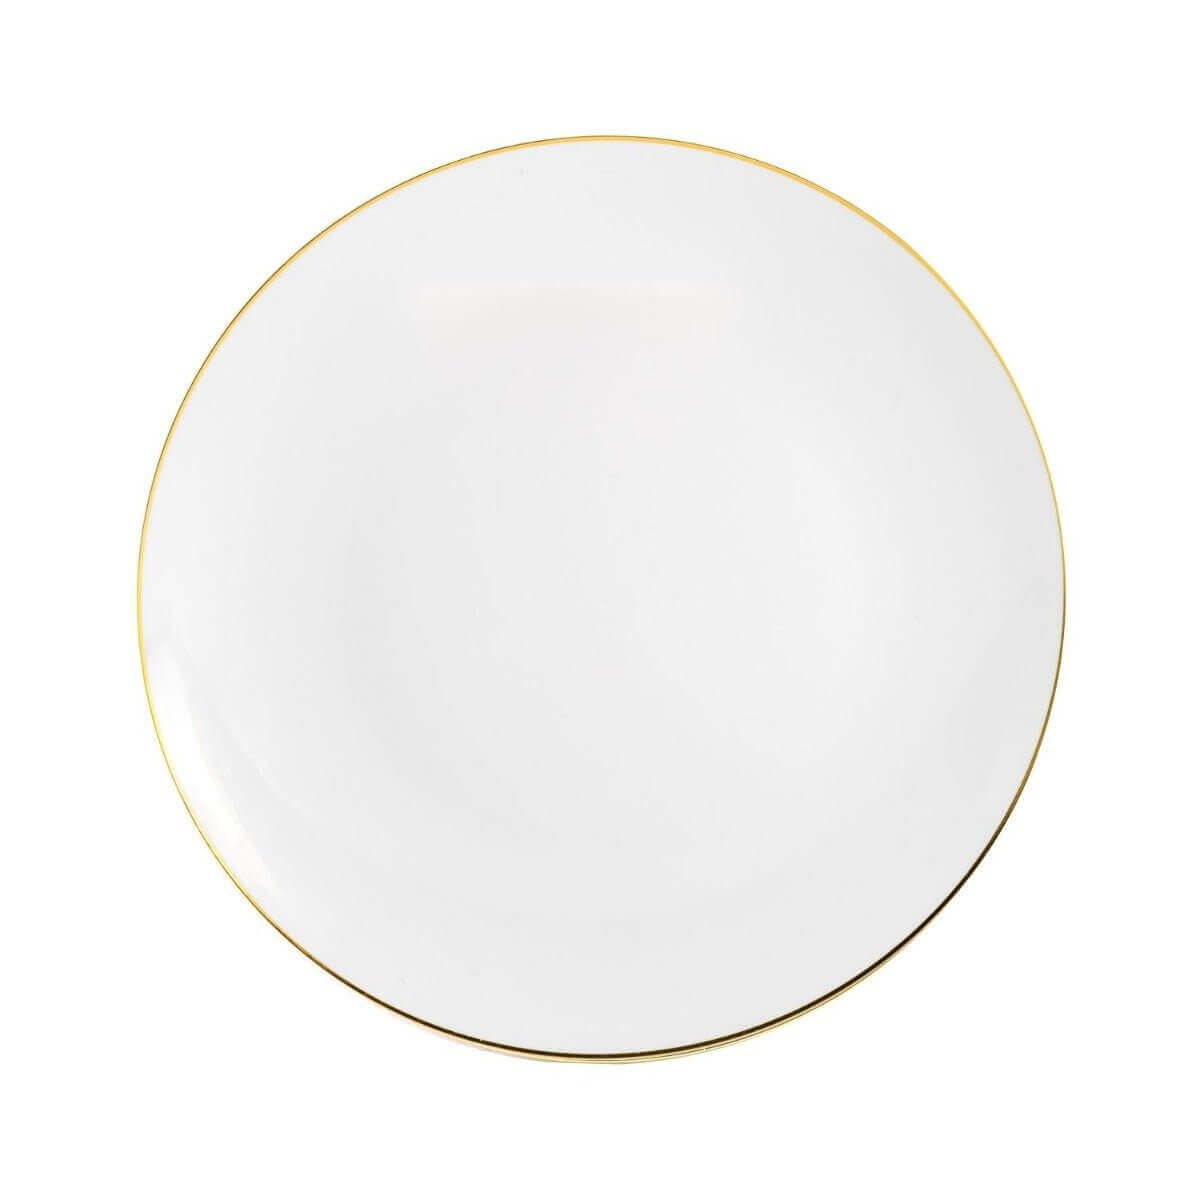 10" Classic Gold Design Plastic Plates (120 Count) - Yom Tov Settings